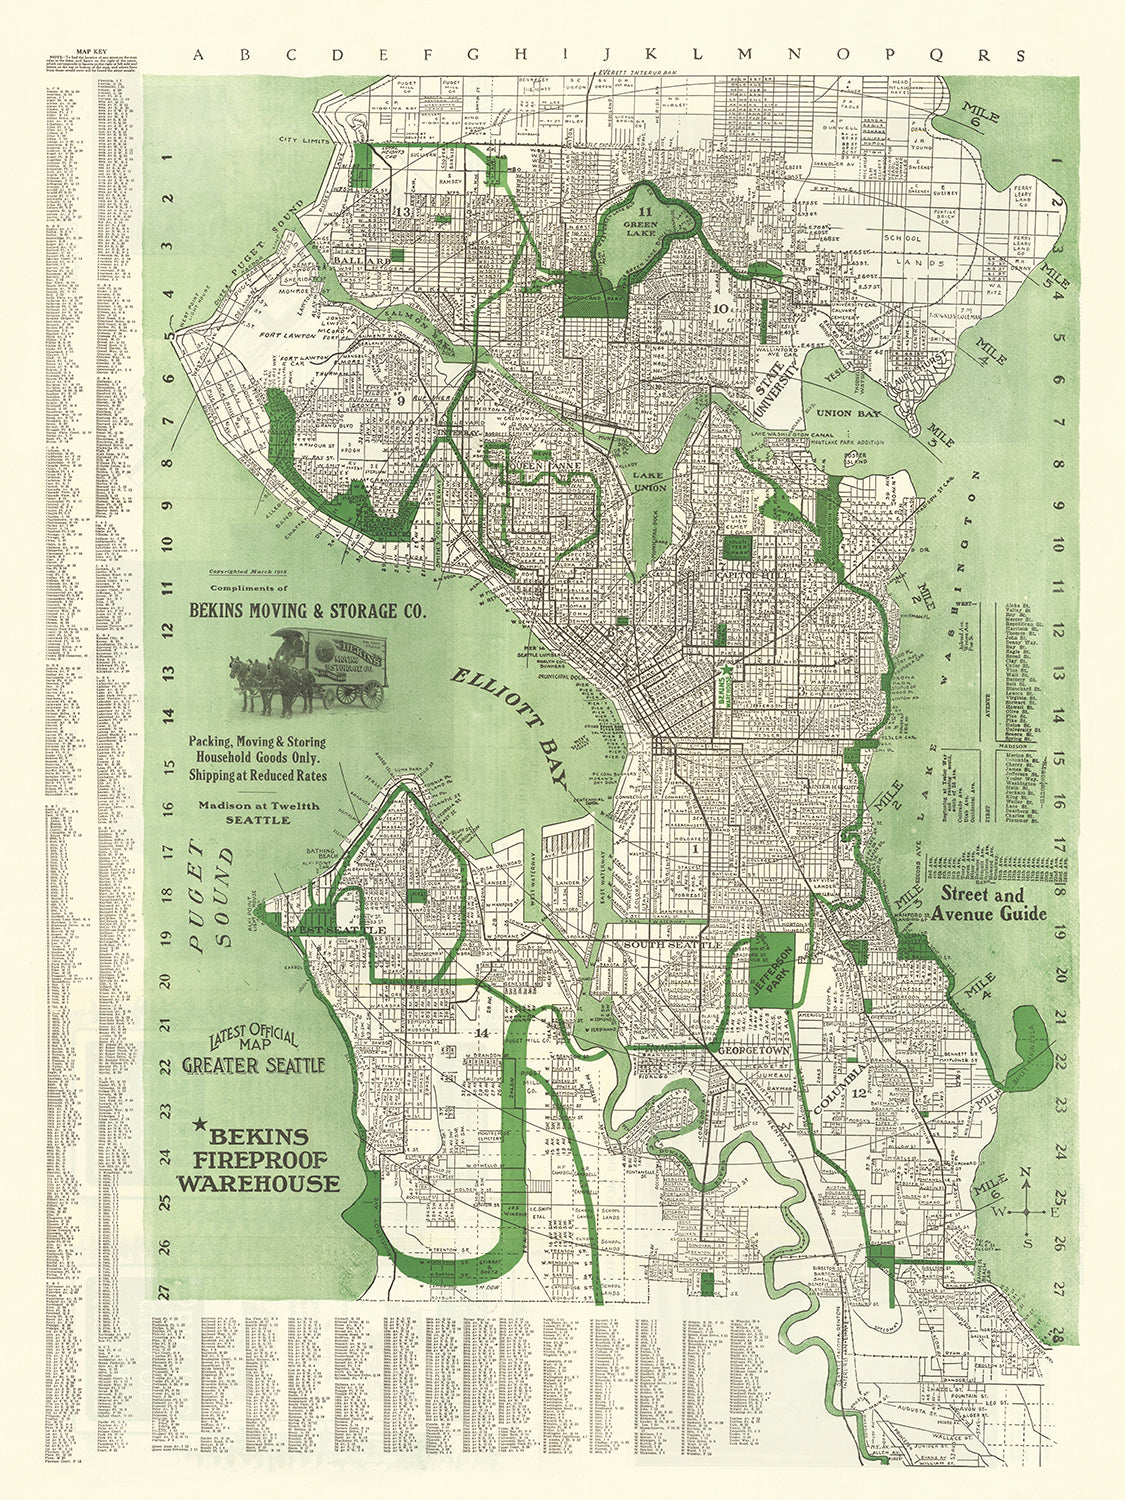 Alte Karte von Seattle, 1913: Pike Place Market, University of Washington, Green Lake, Lake Washington, Smith Tower